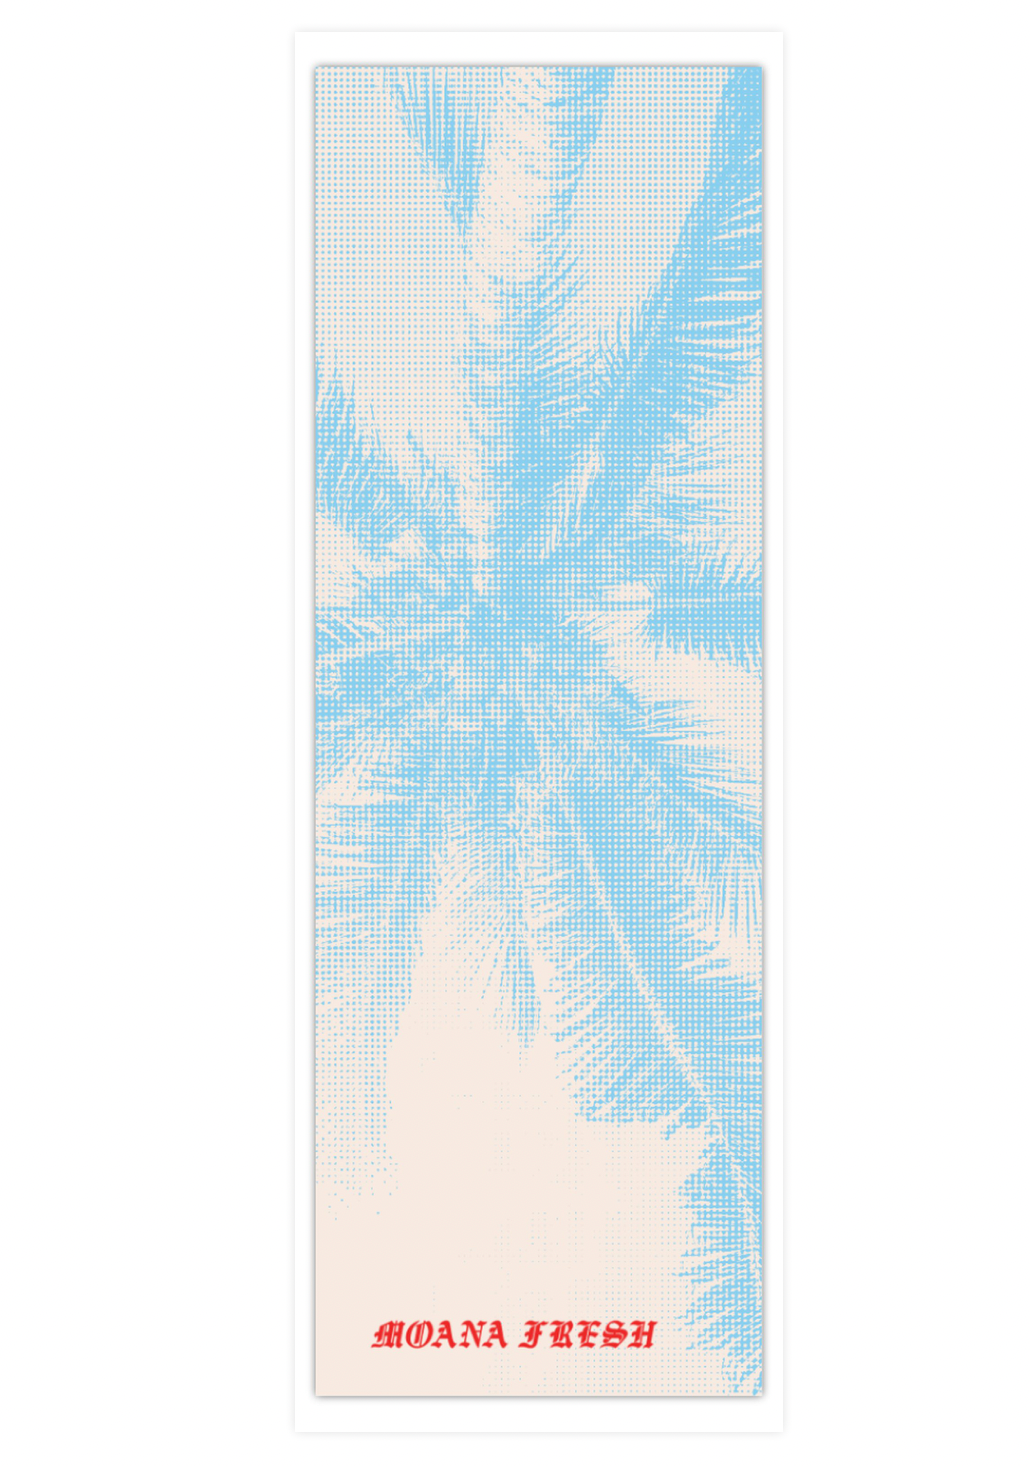 Moana Fresh Bookmark - Palm Tree in Blue